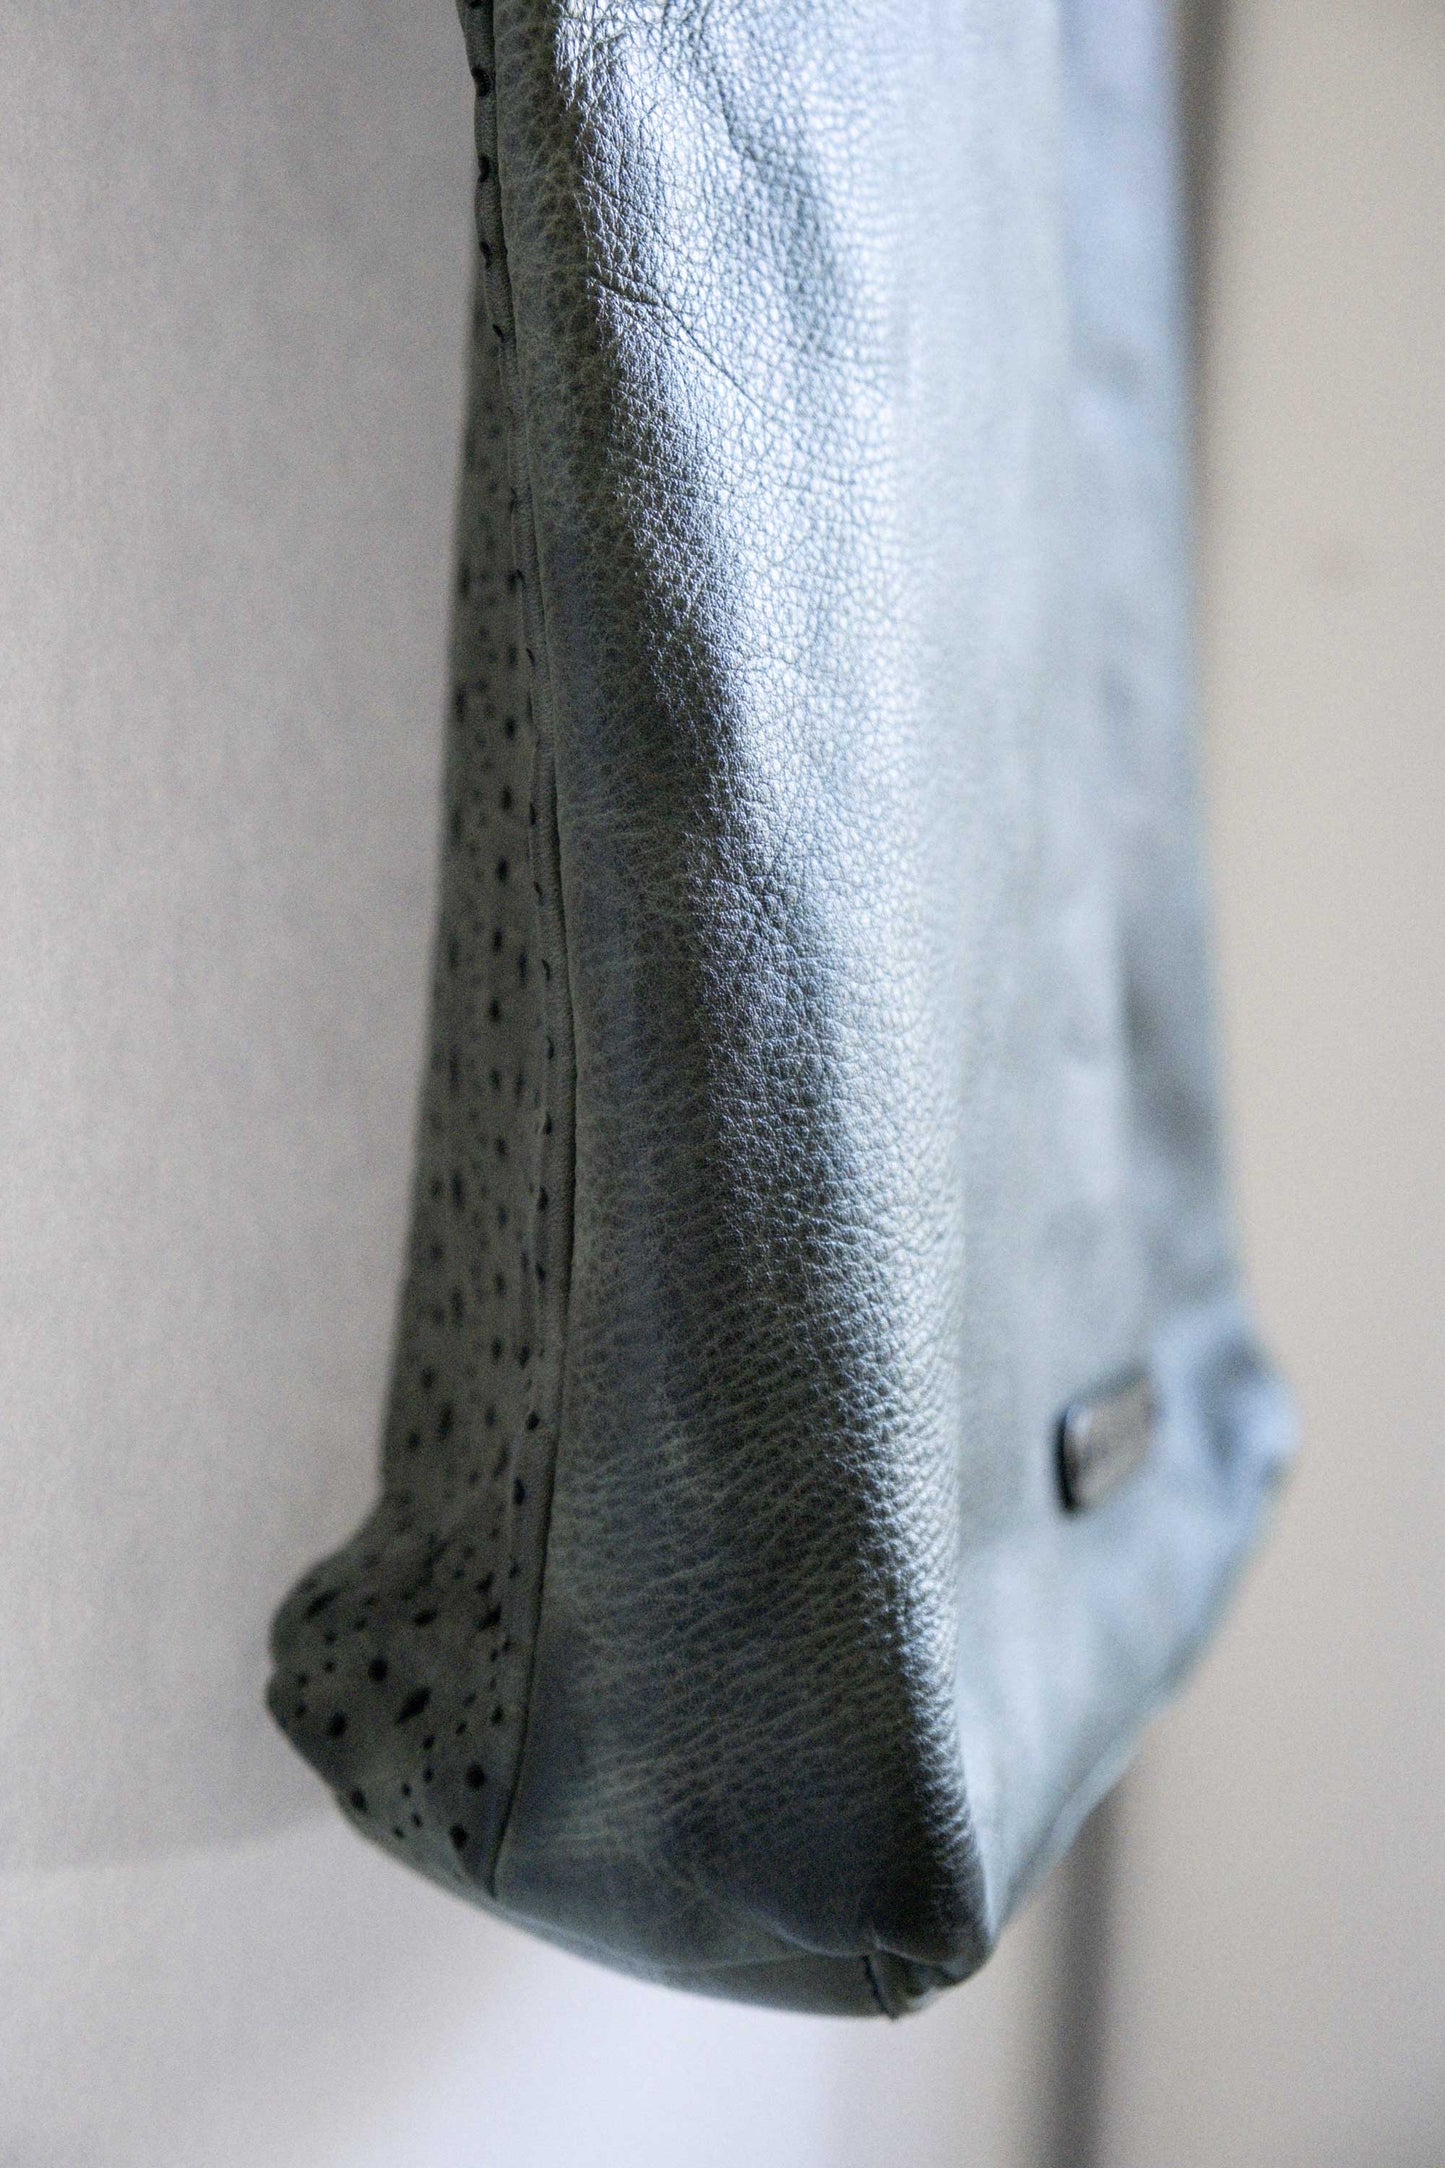 Sofi tote bag in Turner nappa leather